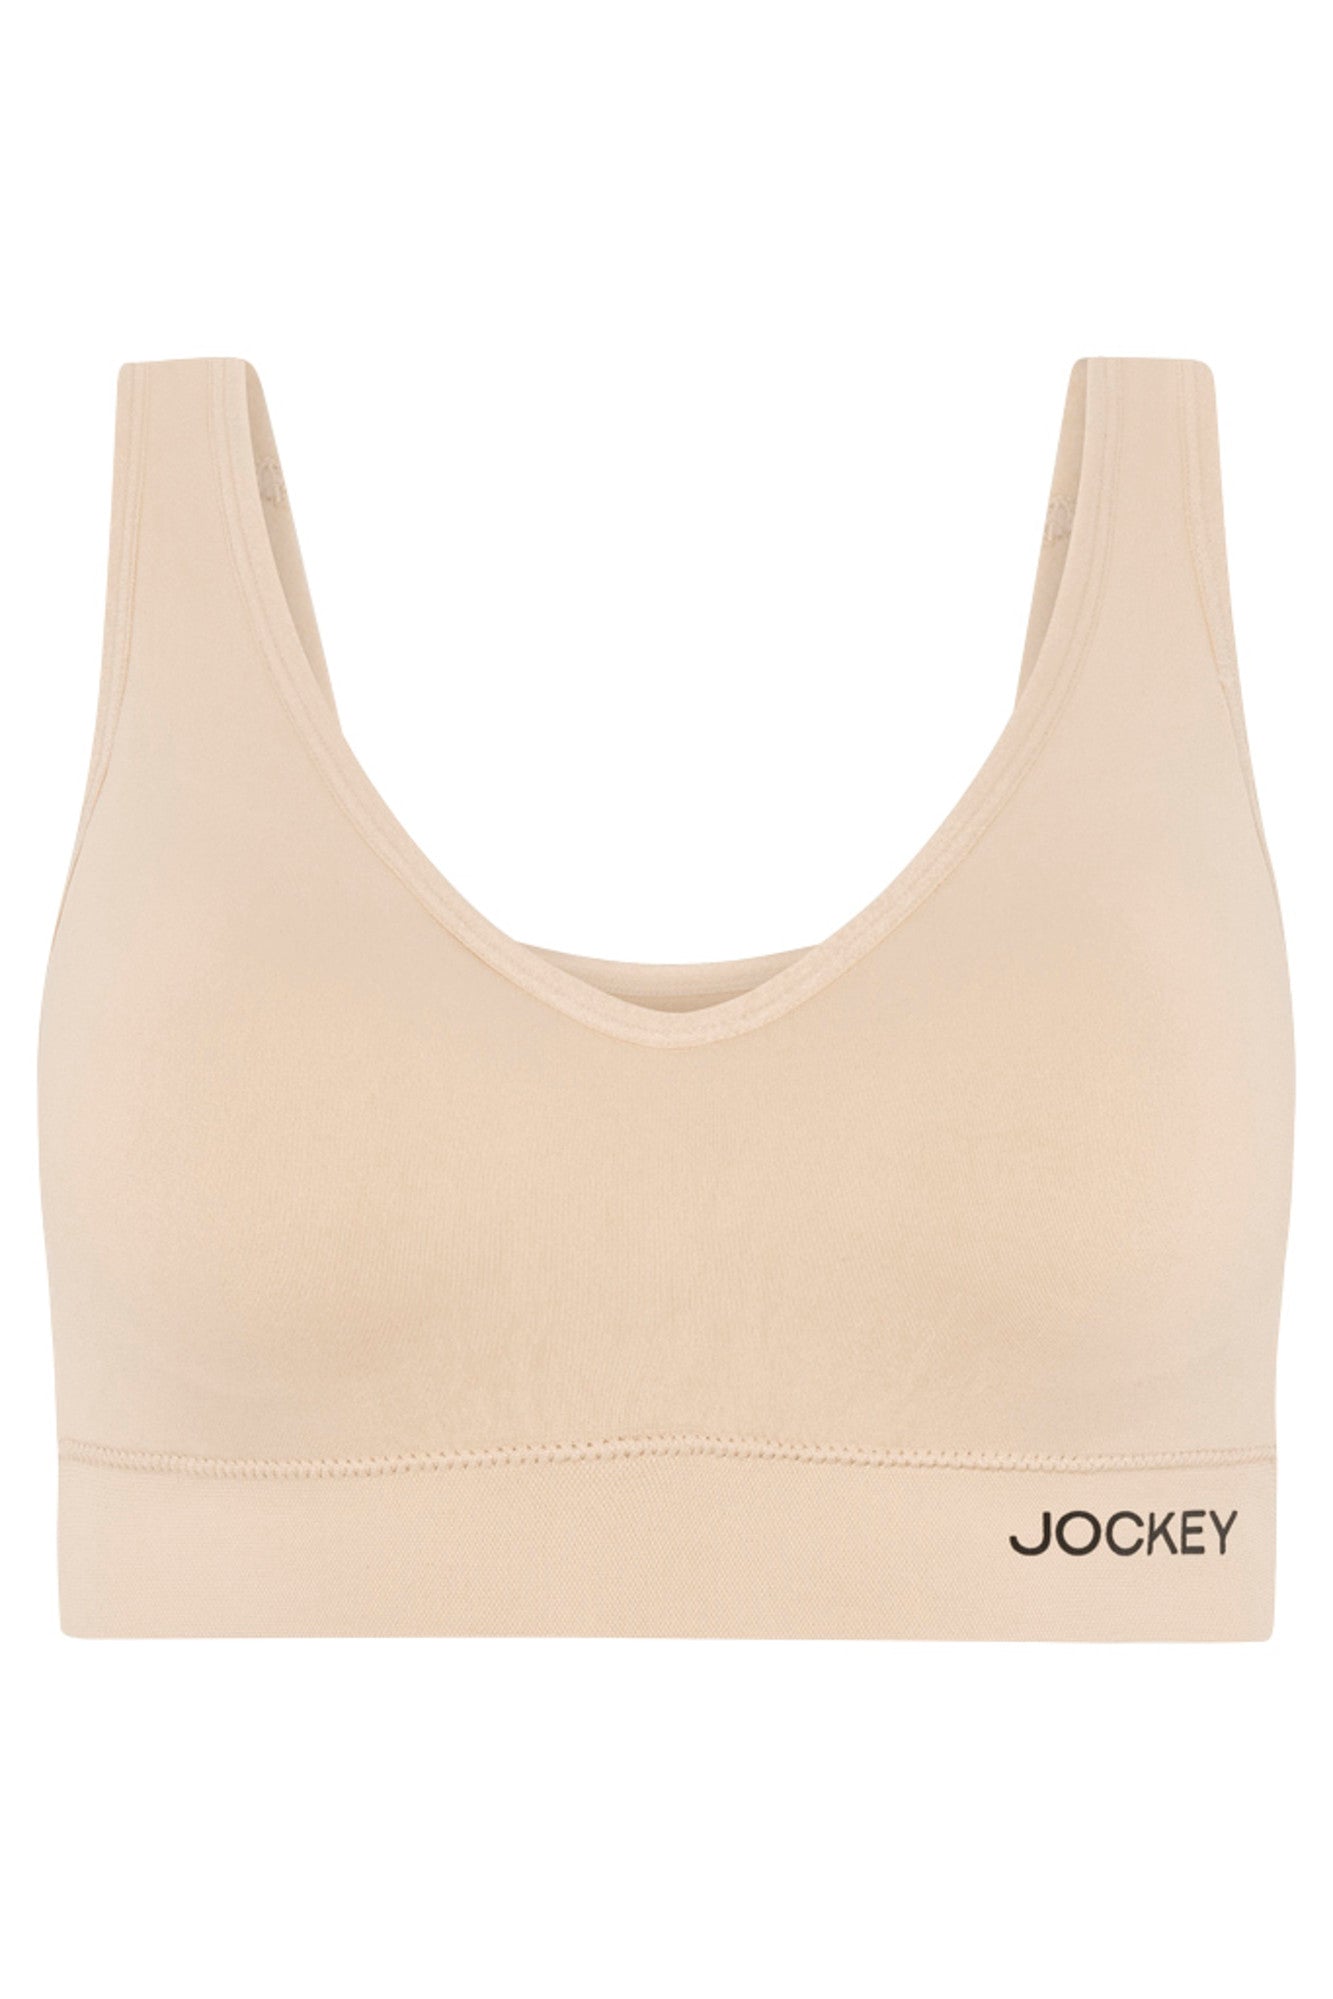 Jockey Women's Ecoseamfree Light Support Bralette 2xl White : Target